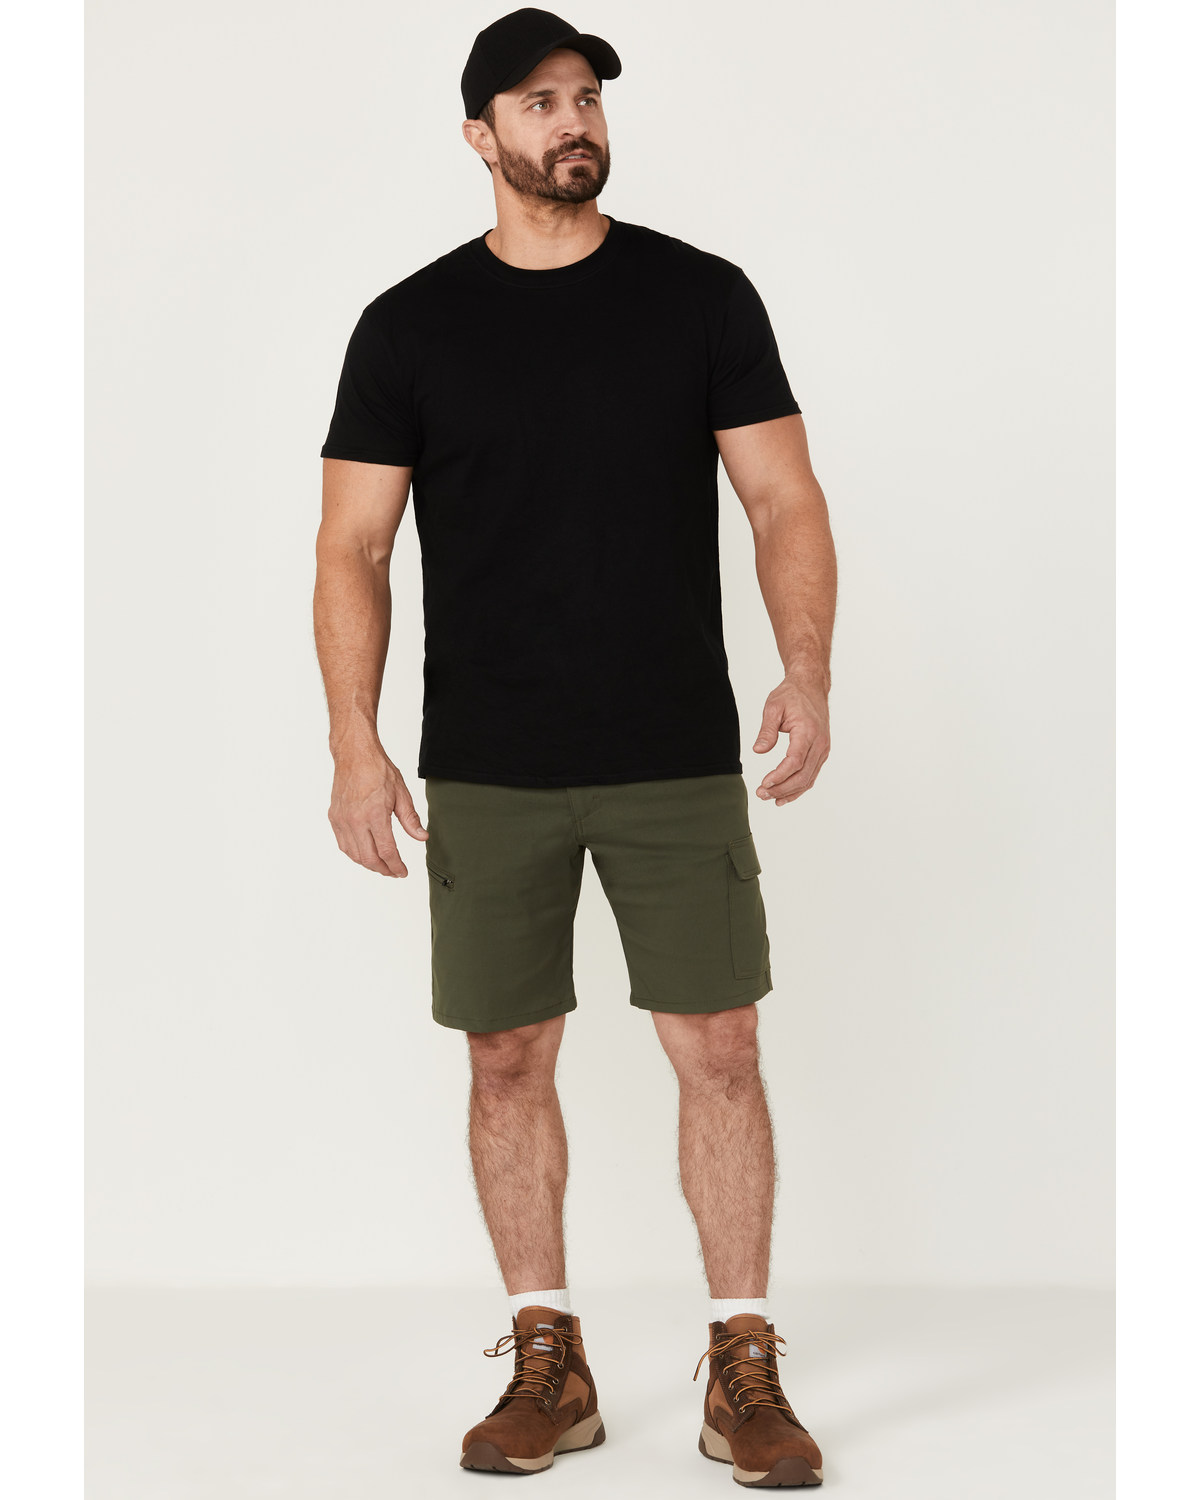 ATG by Wrangler Men's All-Terrain Deep Olive Asymmetric Cargo Shorts